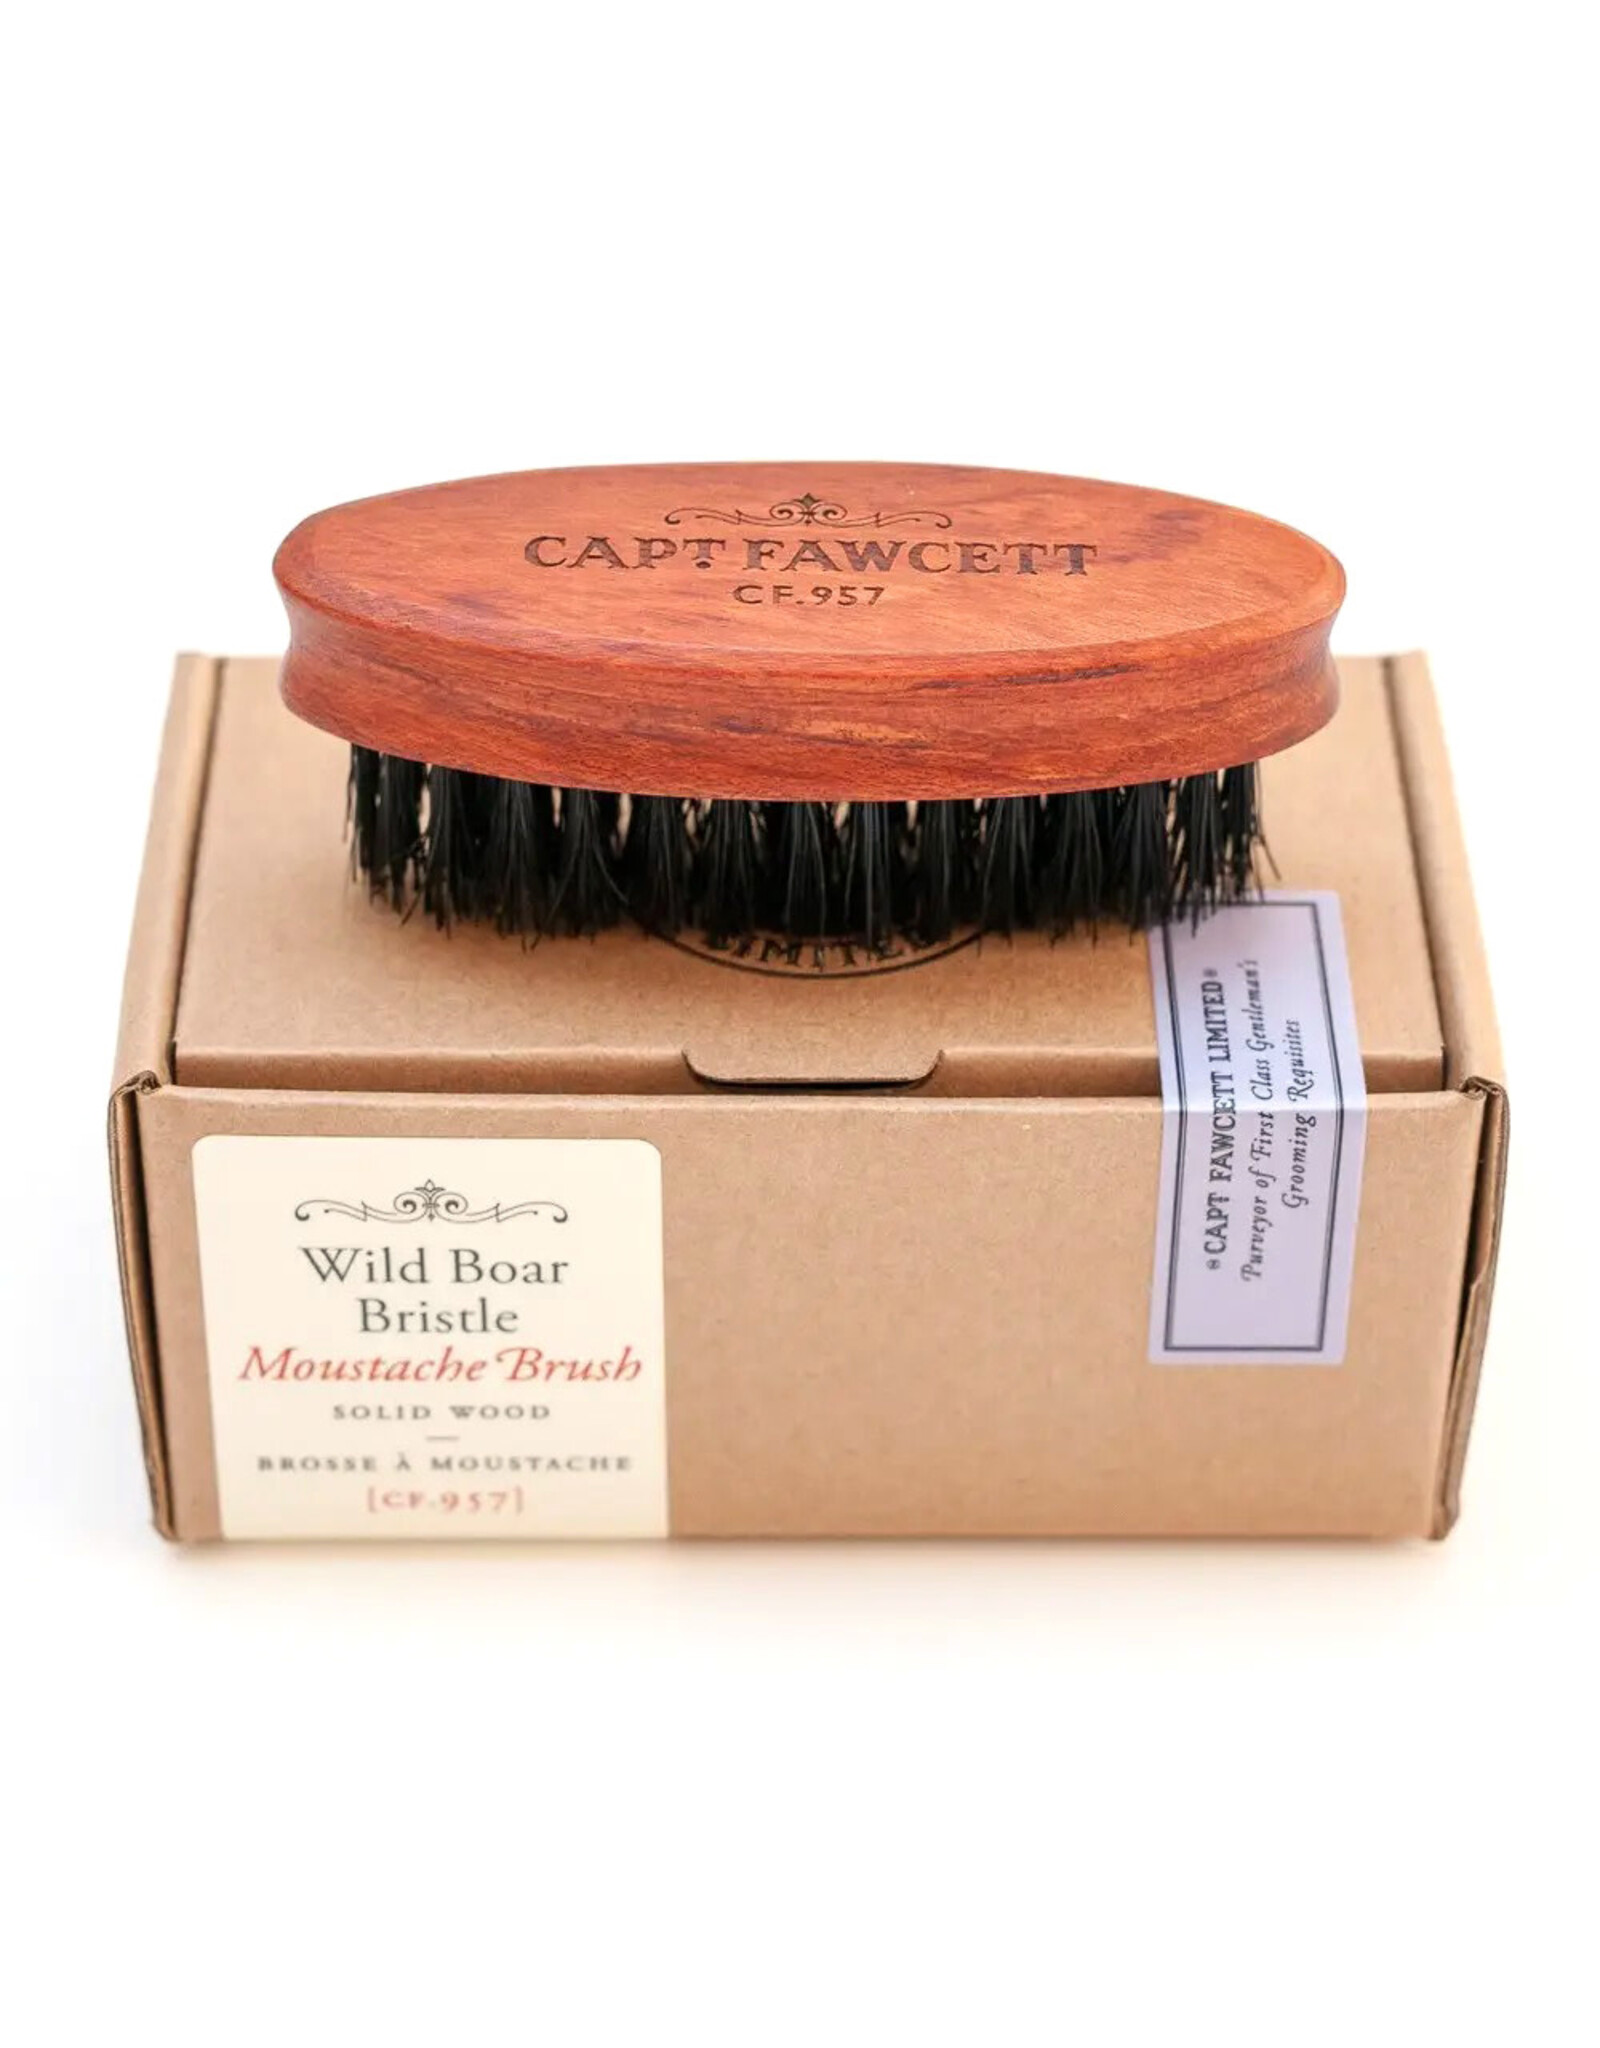 Captain Fawcett Ltd. Wild Boar Bristle Moustache Brush